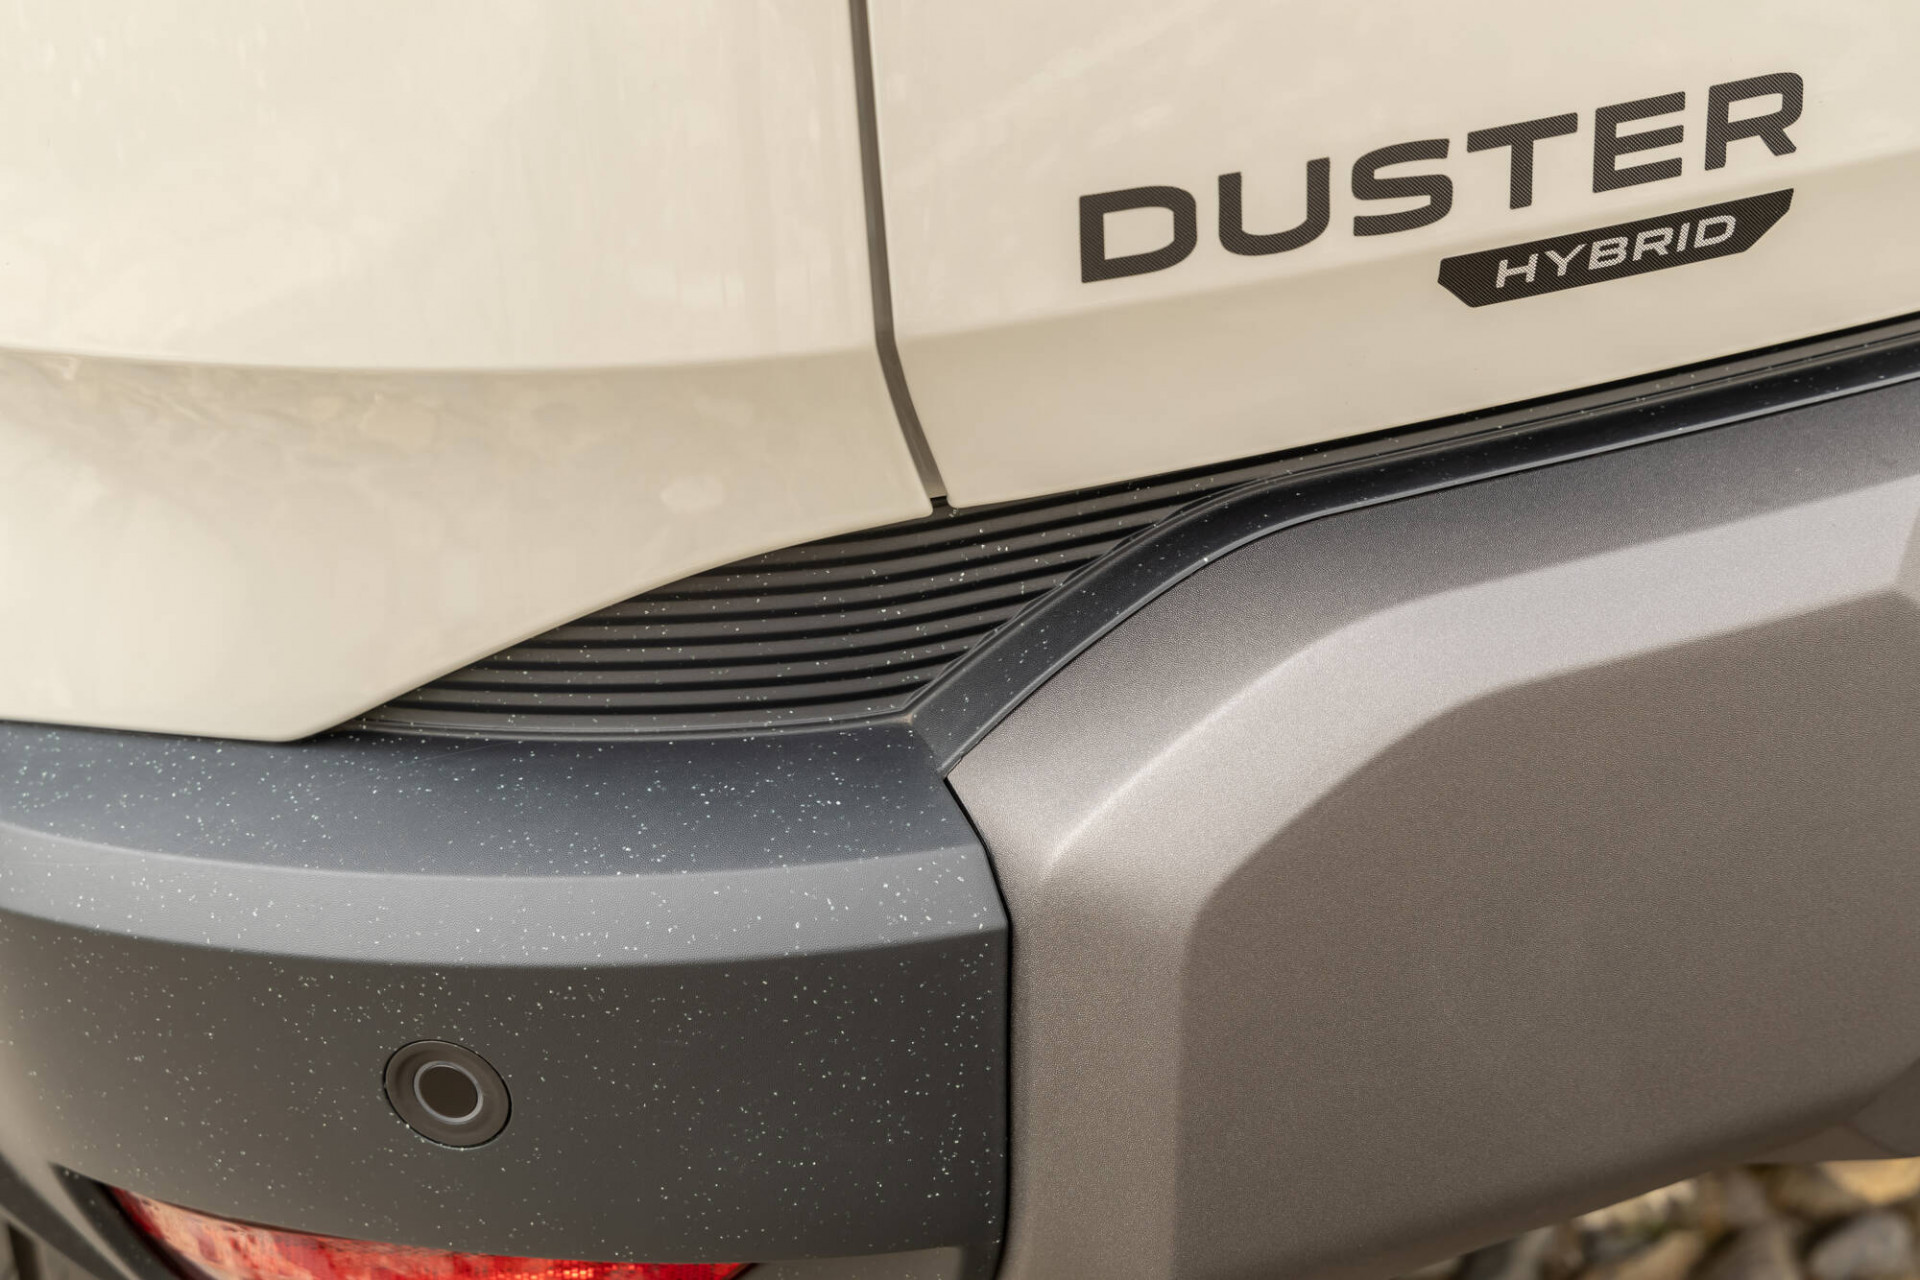 Review Dacia Duster 2024